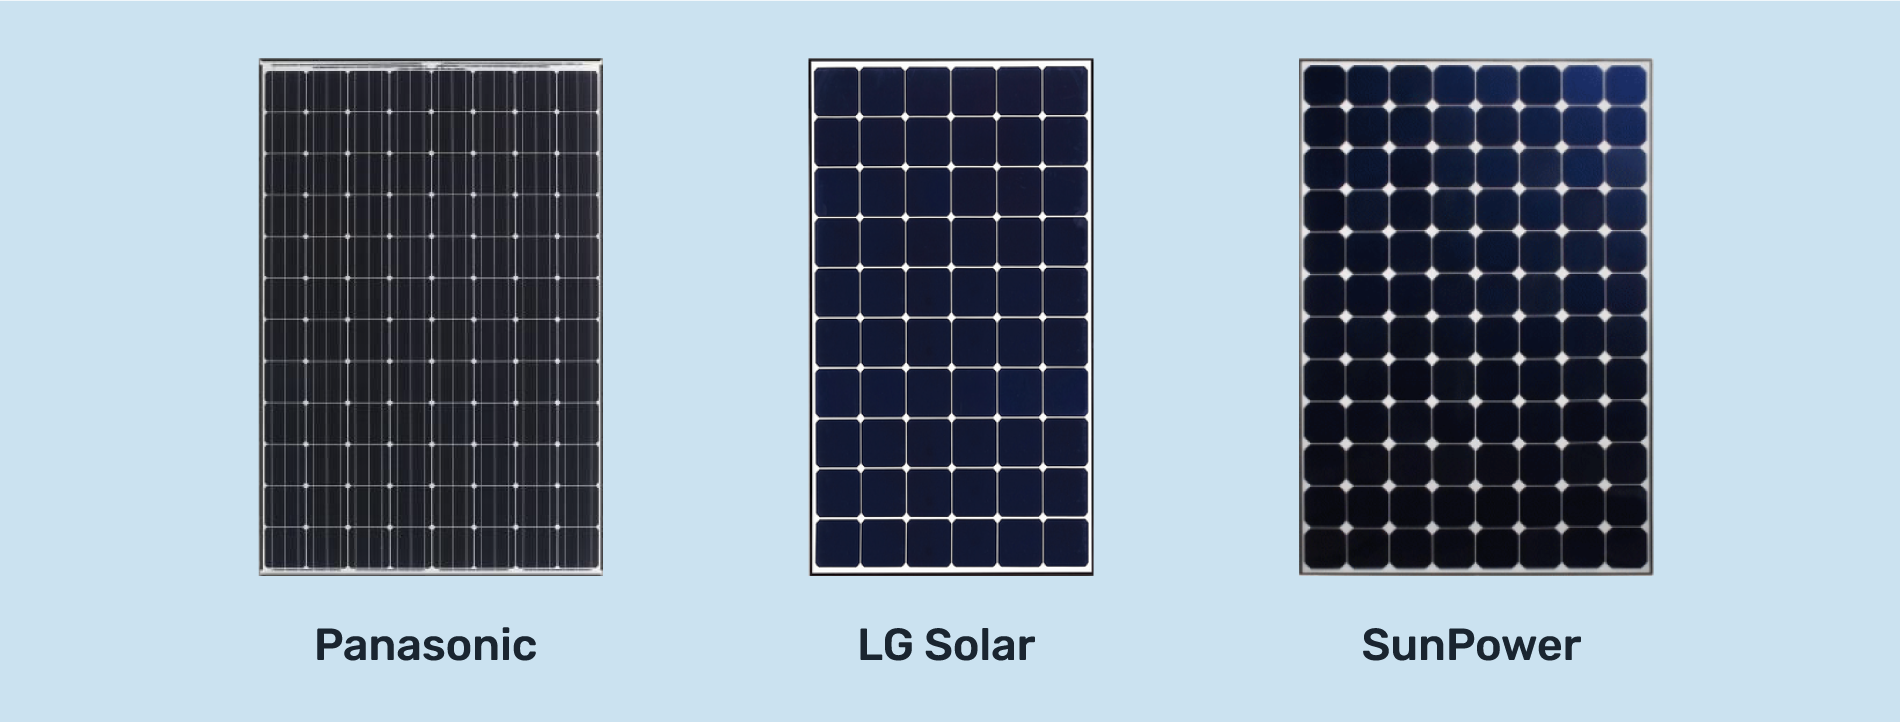 solar reviews expert choice solar panels 2018